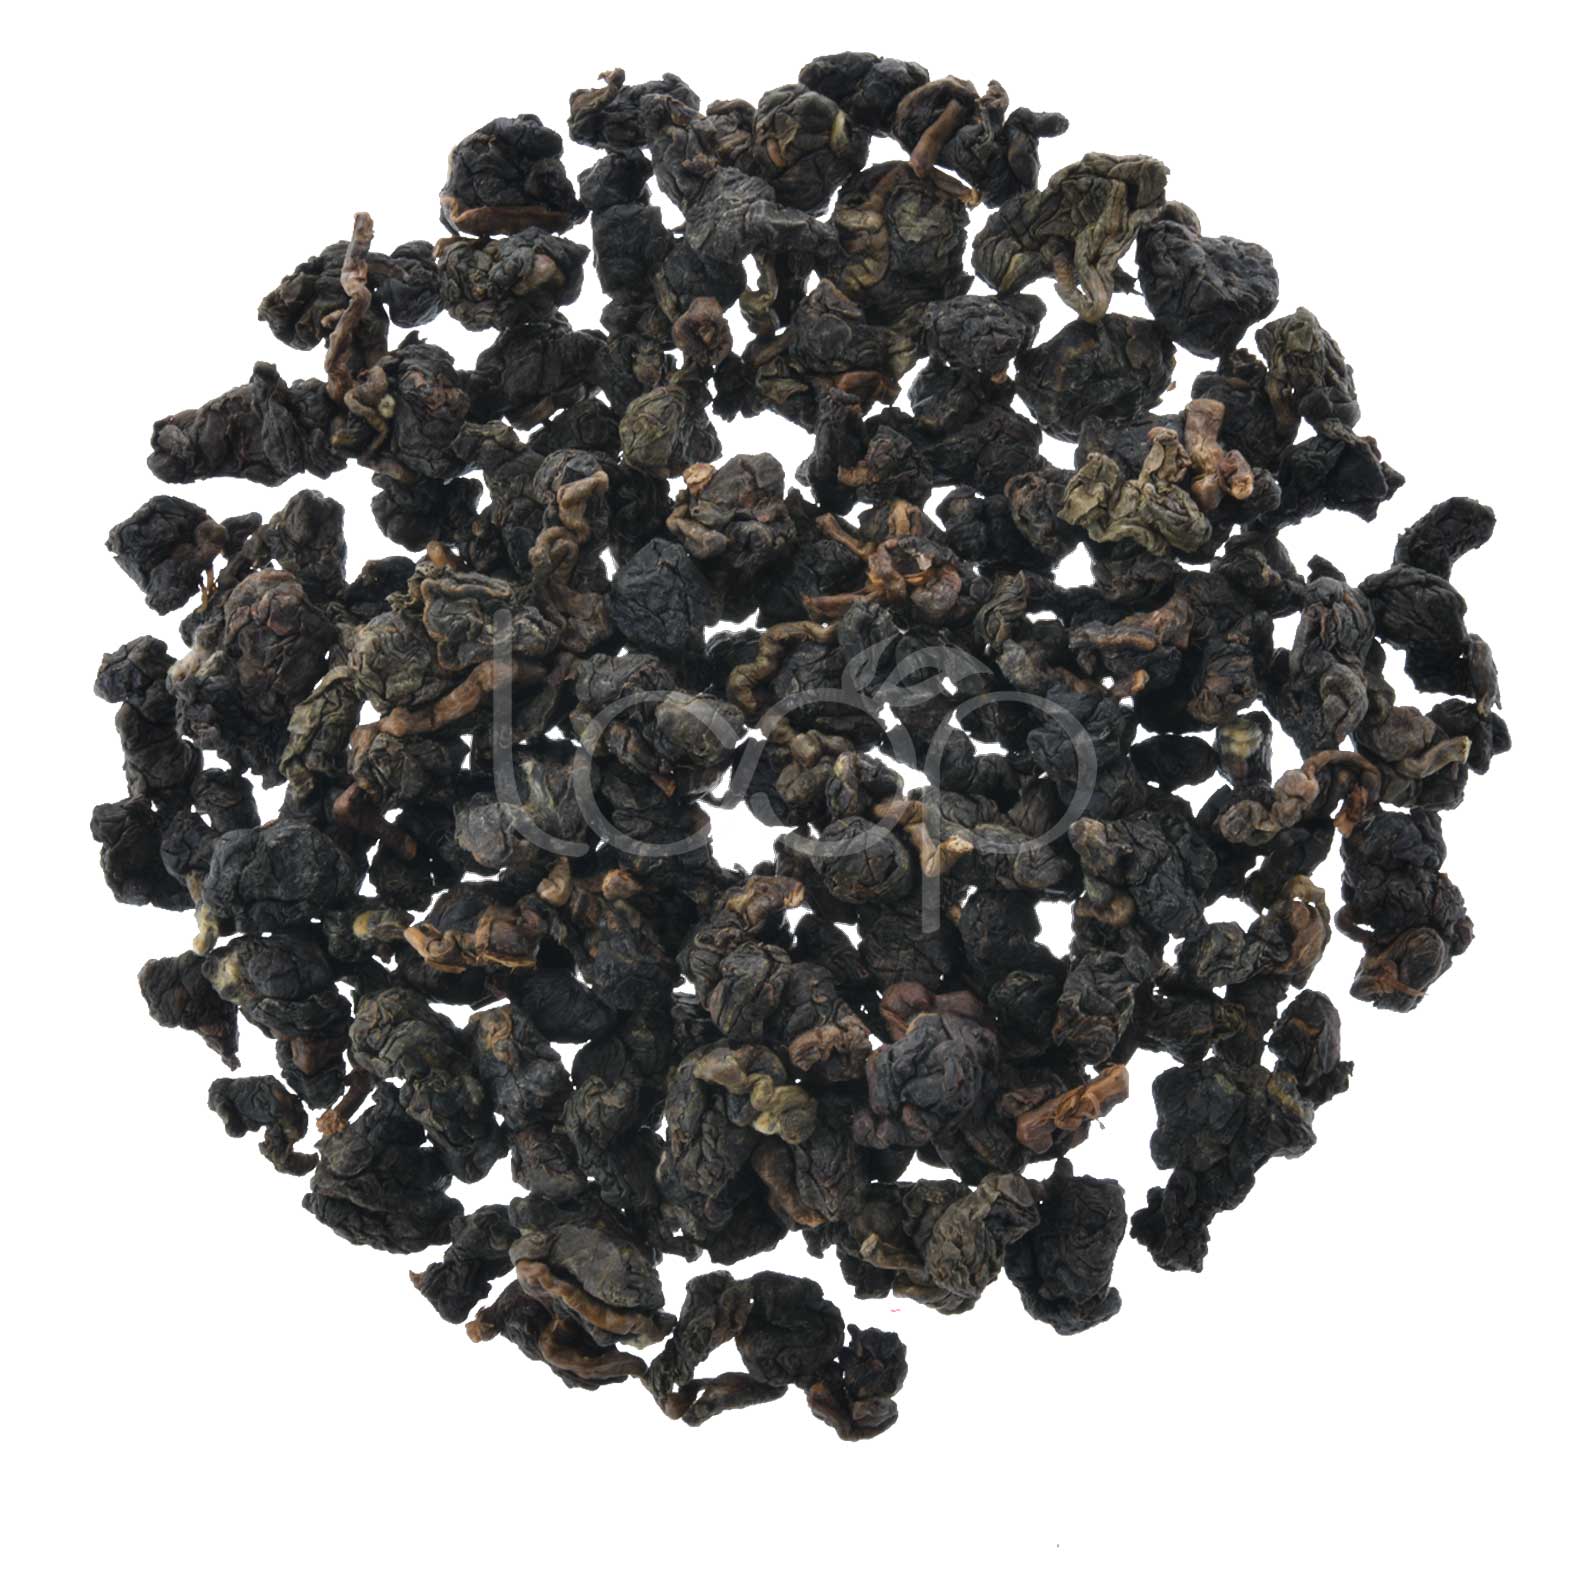 Manufacturing Companies for Dahong Pao Tea - China Oolong Tea Red Oolong Tea#2 – Goodtea